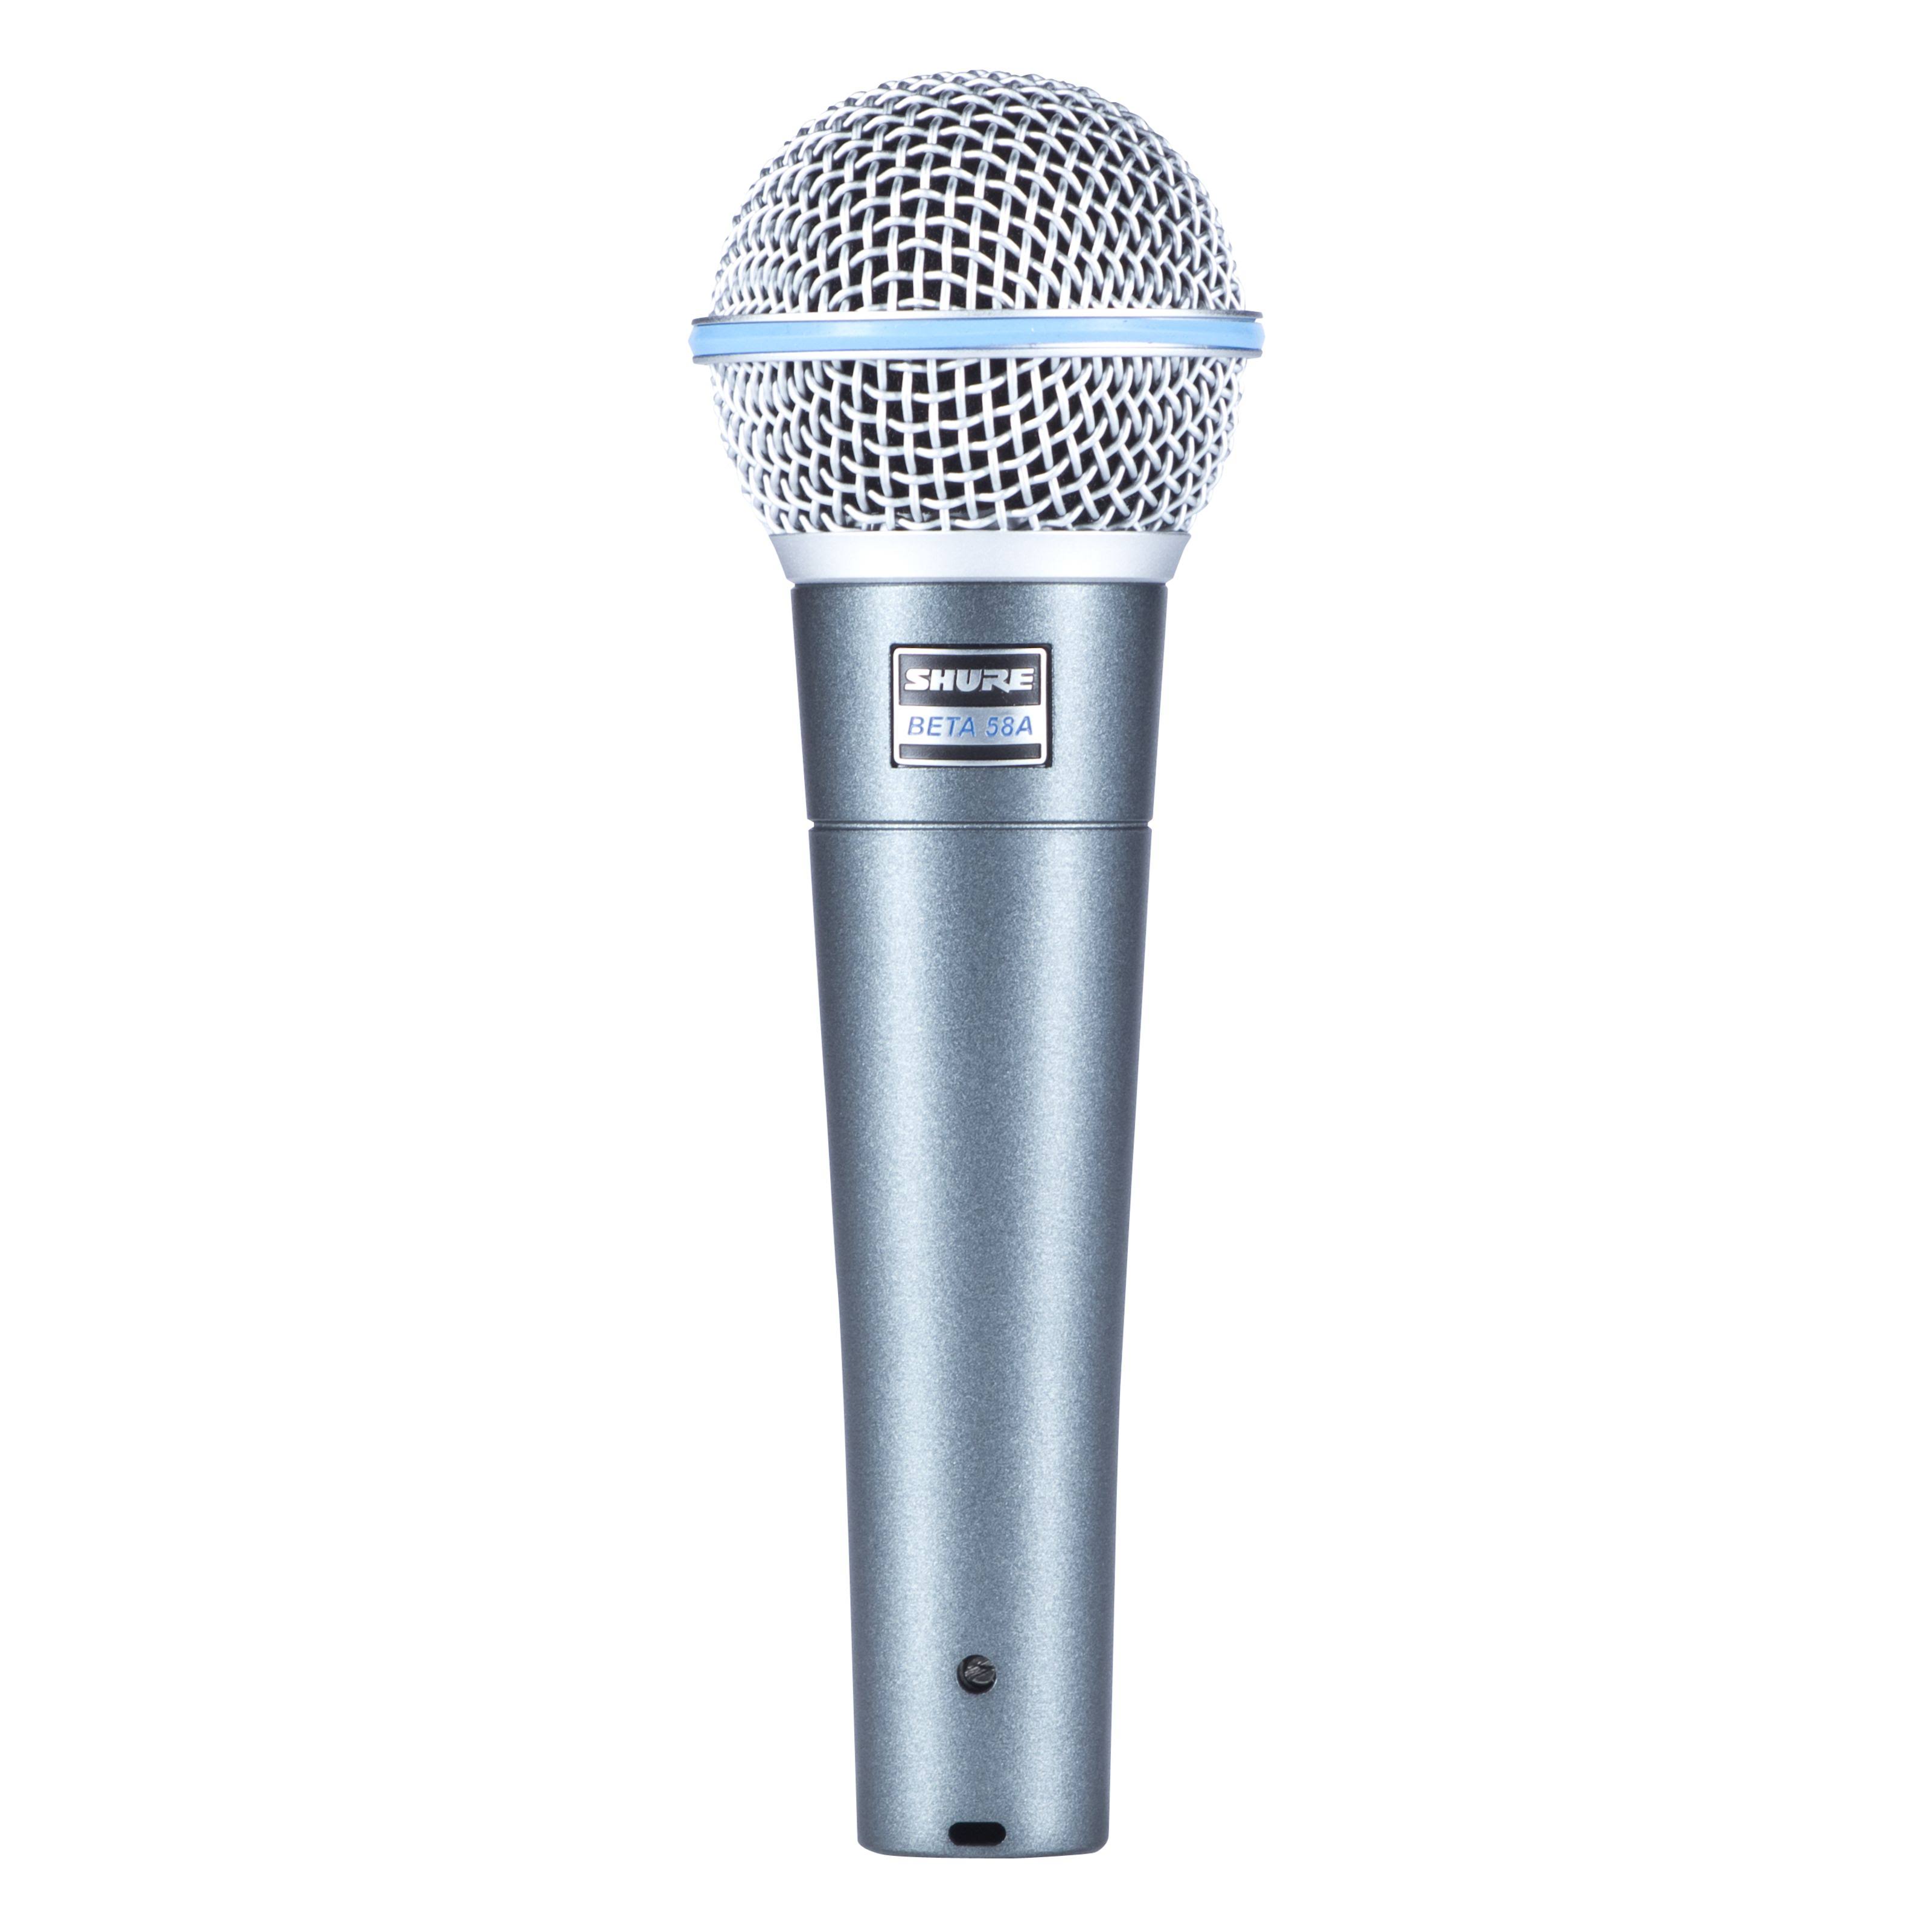 Shure Beta 58A Cardioid Dynamic Vocal Microphone